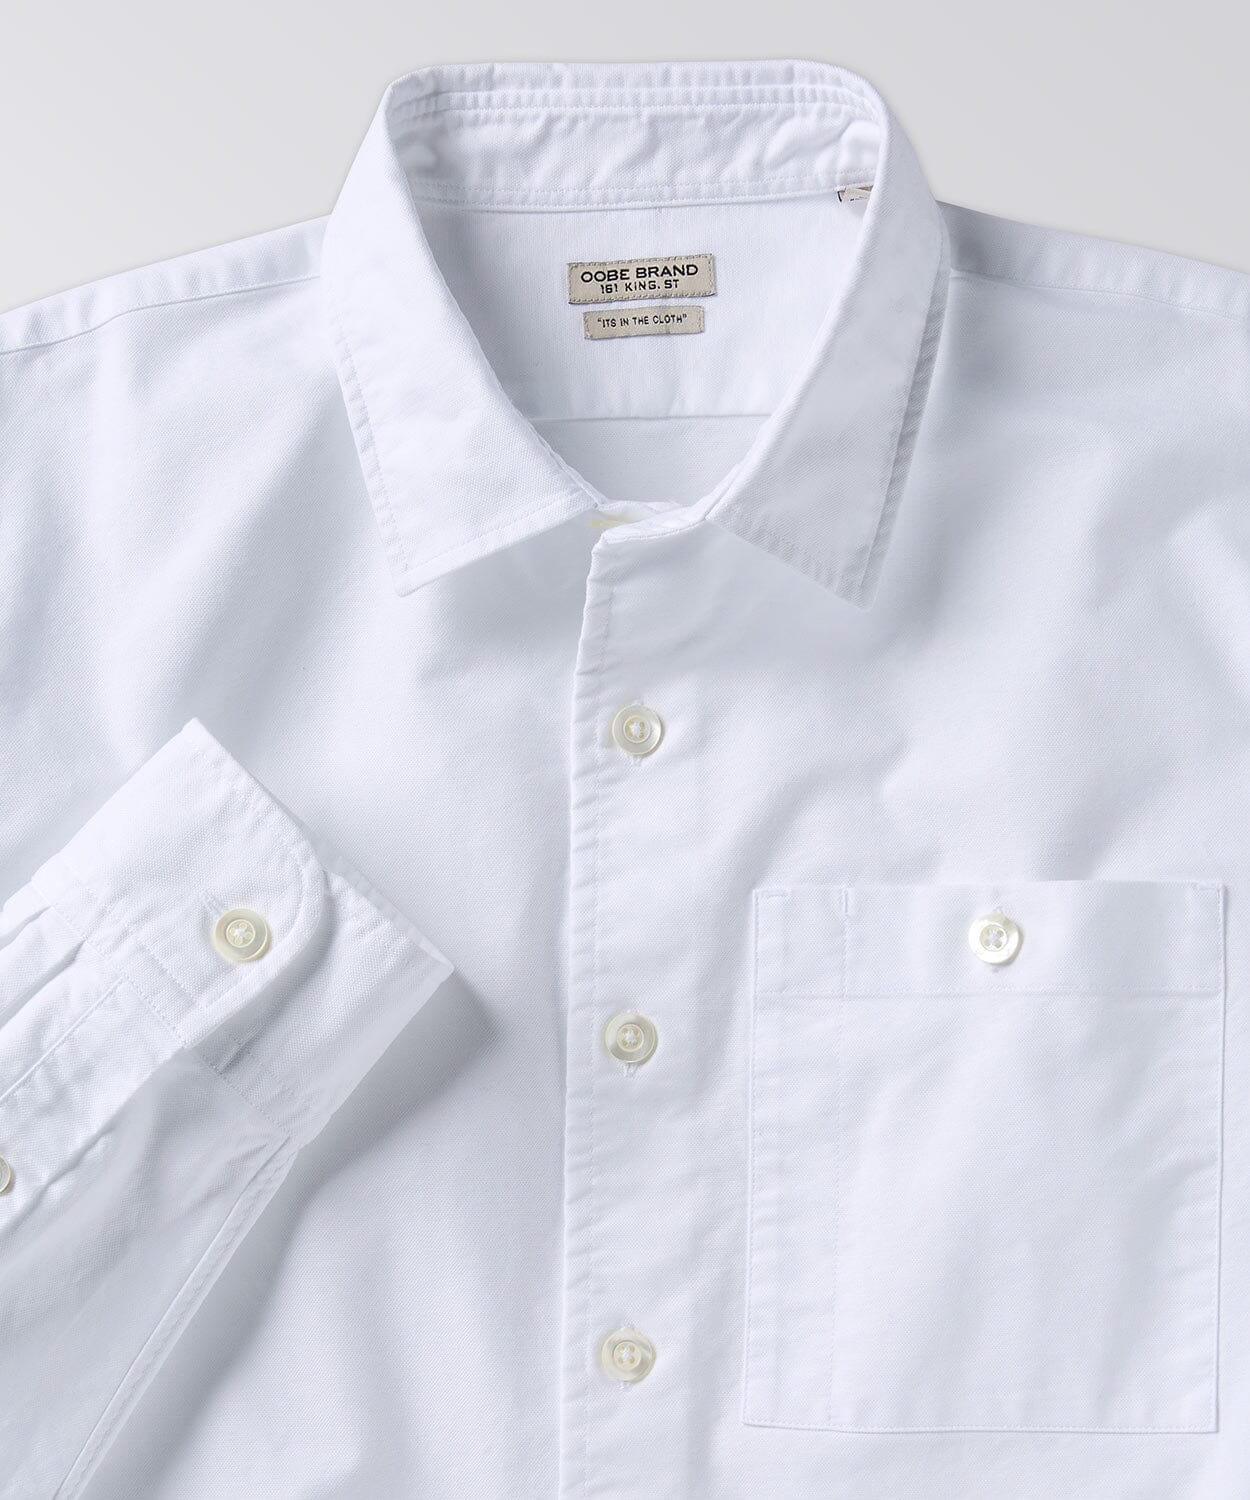 Aalto Oxford Shirt Button Downs OOBE BRAND 